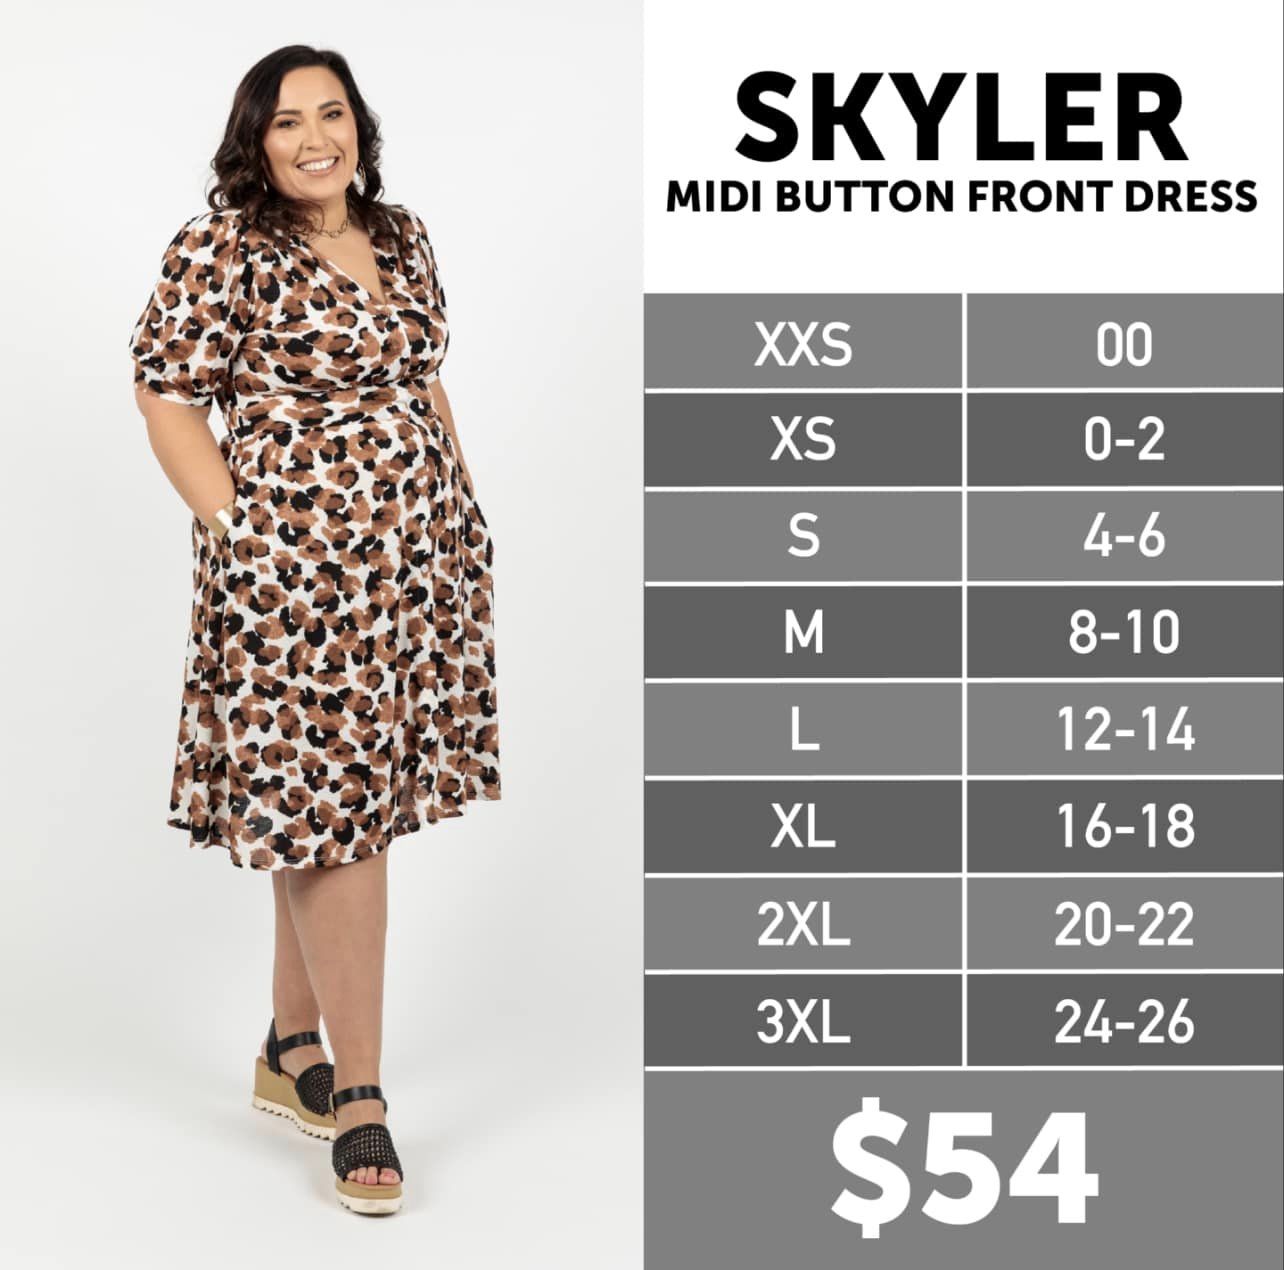 SKYLER Midi Button Front Dress